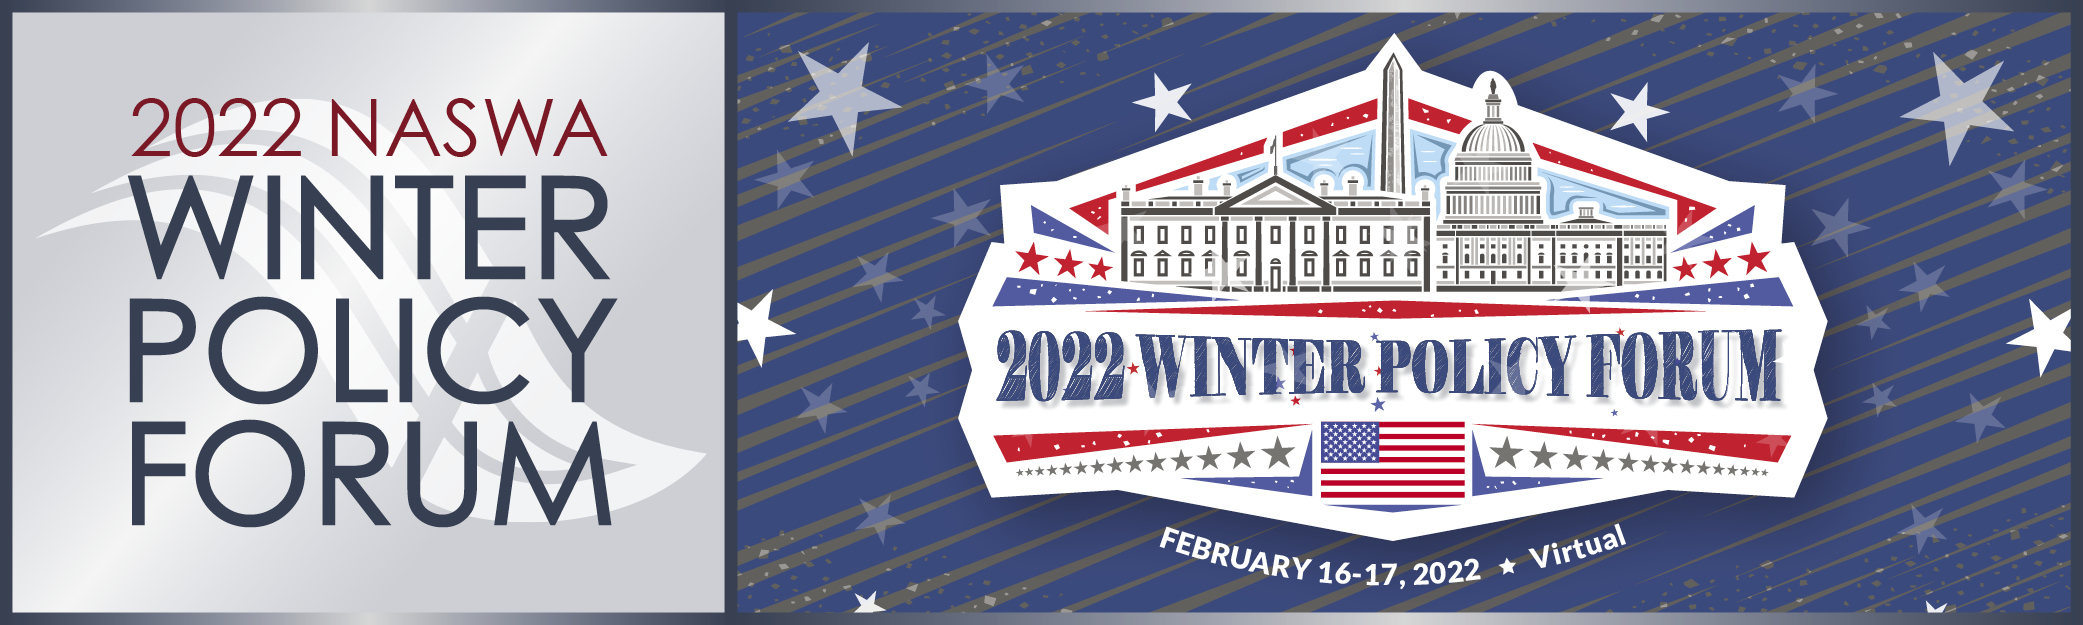 2022 NASWA Winter Policy Forum, February 16-17, 2022, Virtual